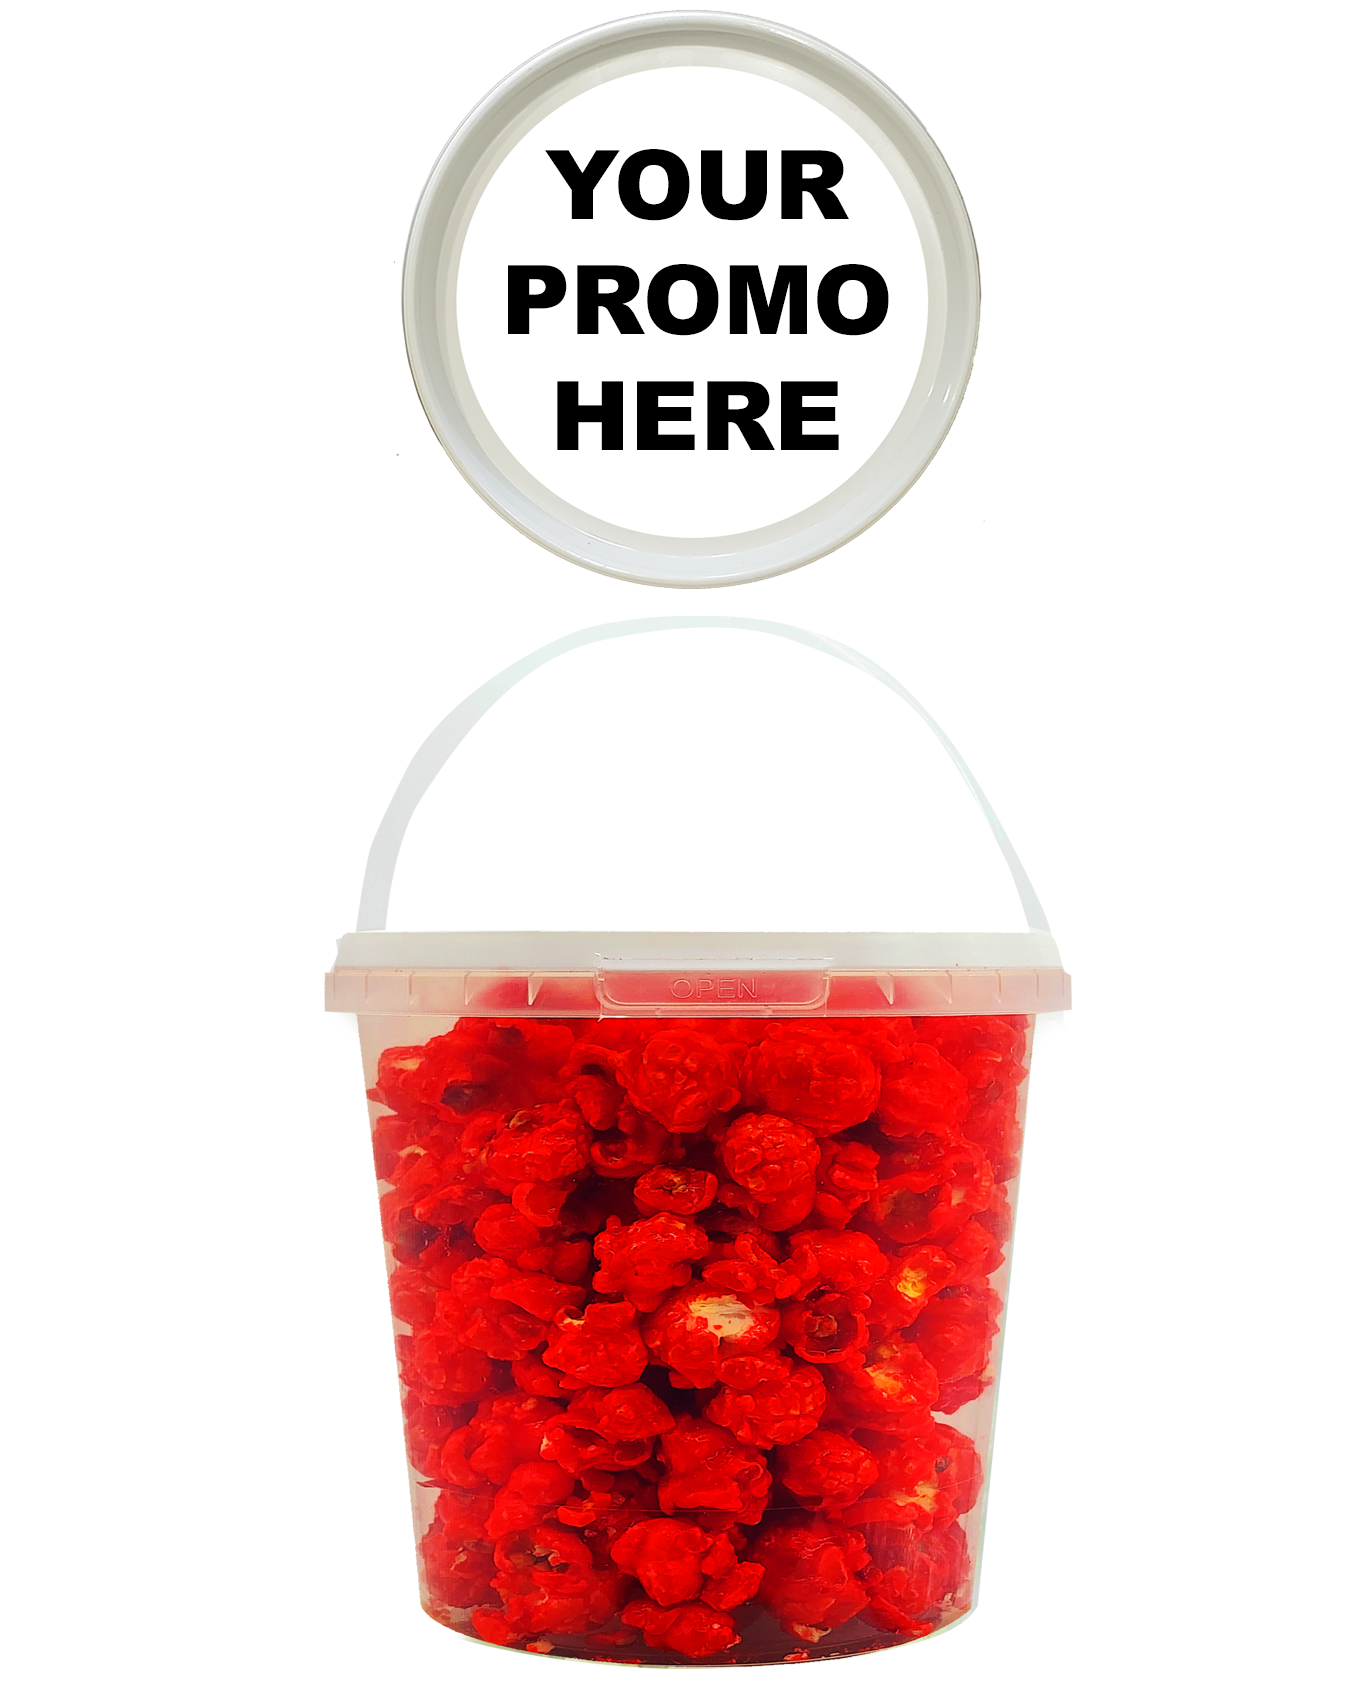 Promo Pop™ - Wild Cherry Jumbo (as low as $8.99 per bucket) Case of 12 Price